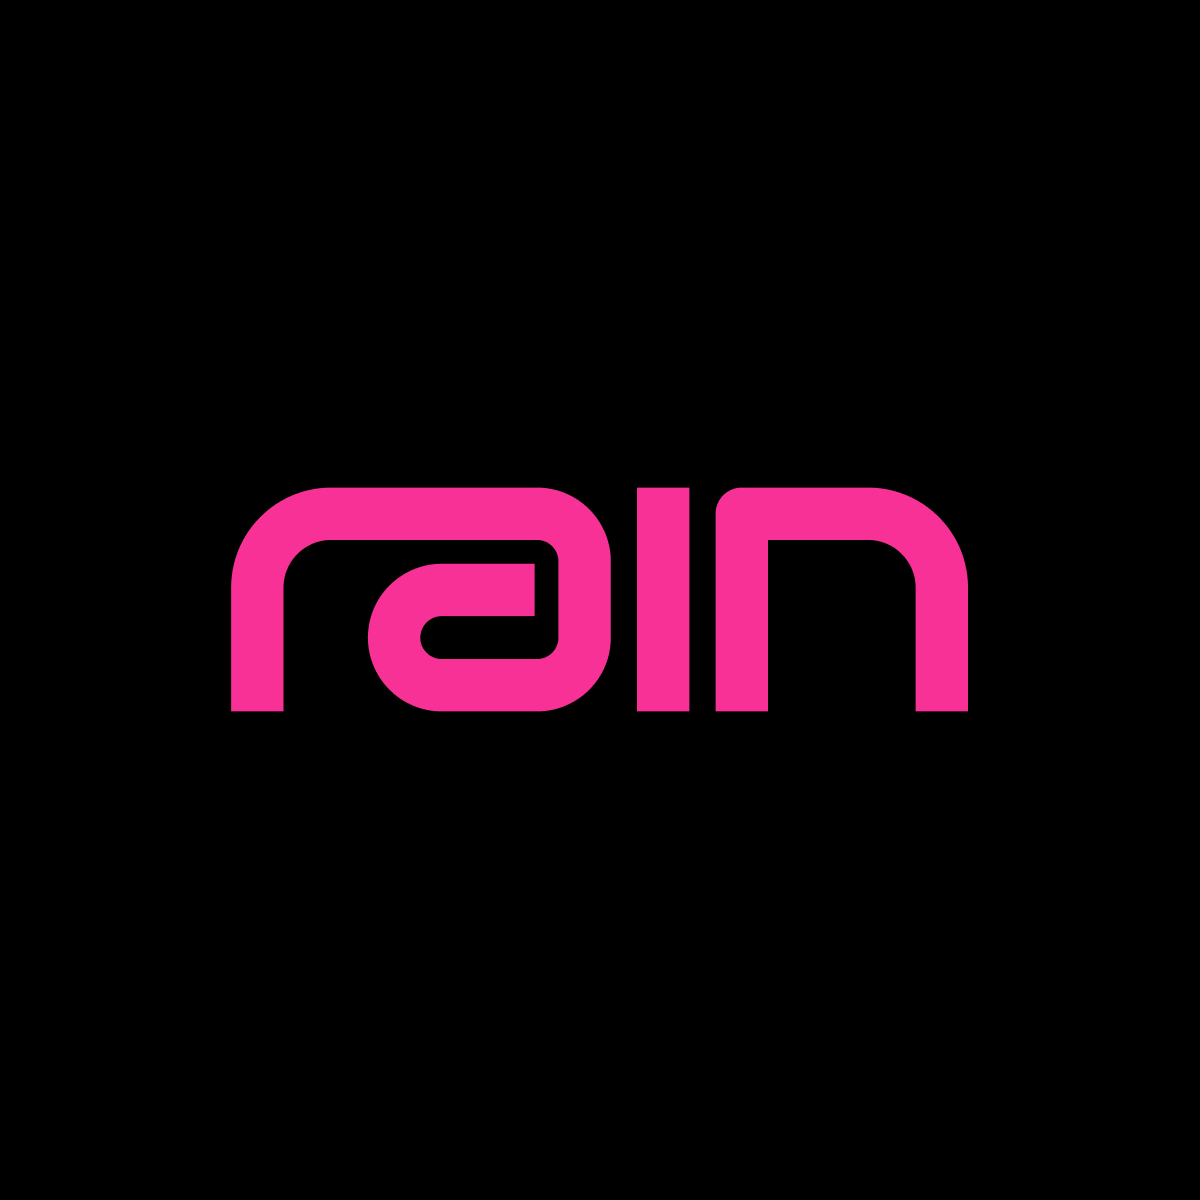 Rain logo